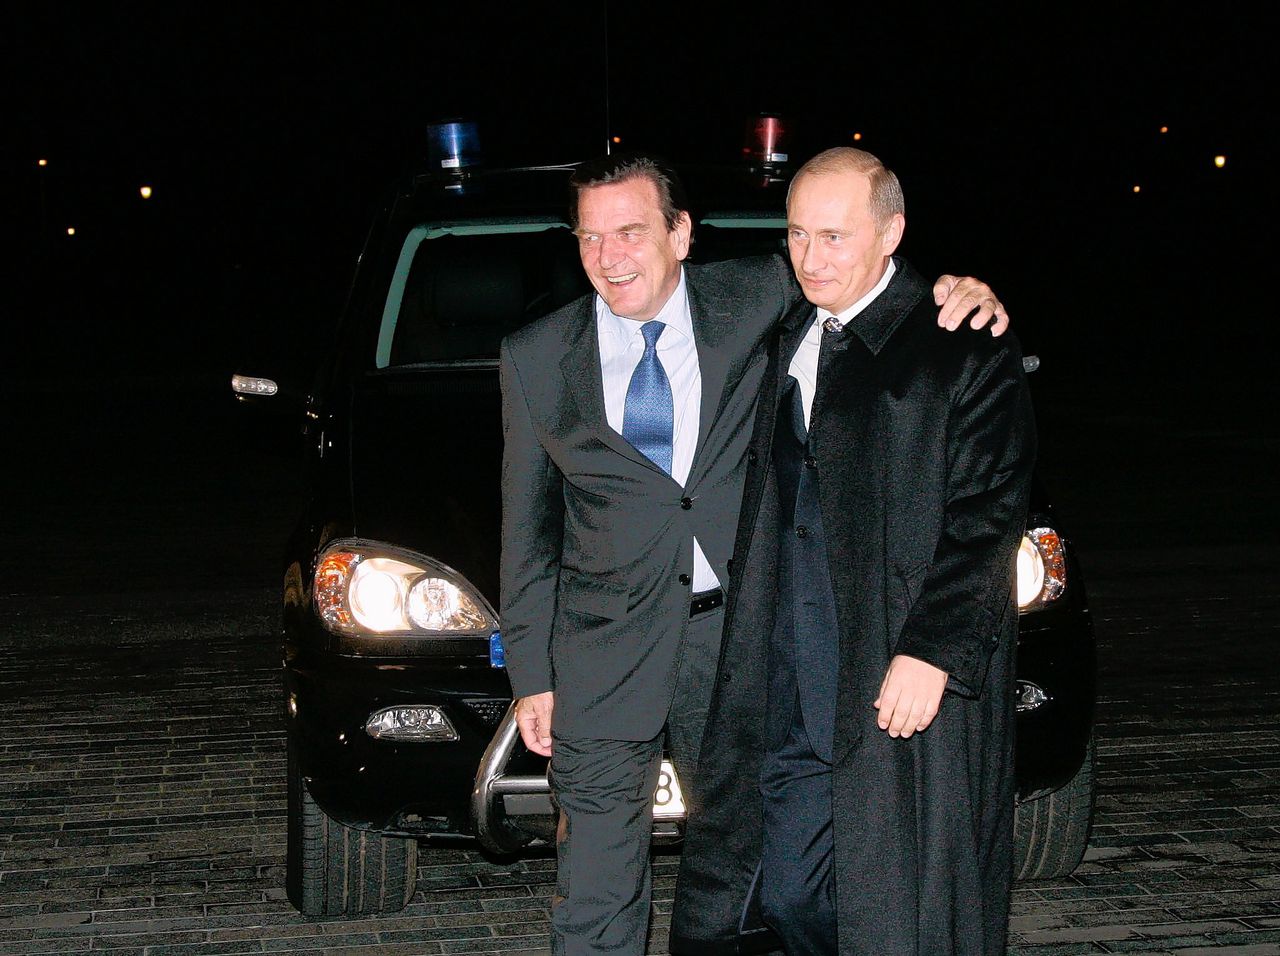 Vladimir Poetin samen met toenmalig bondskanselier Gerhard Schröder in het Konstantinovsky Paleis, 7 oktober 2005.